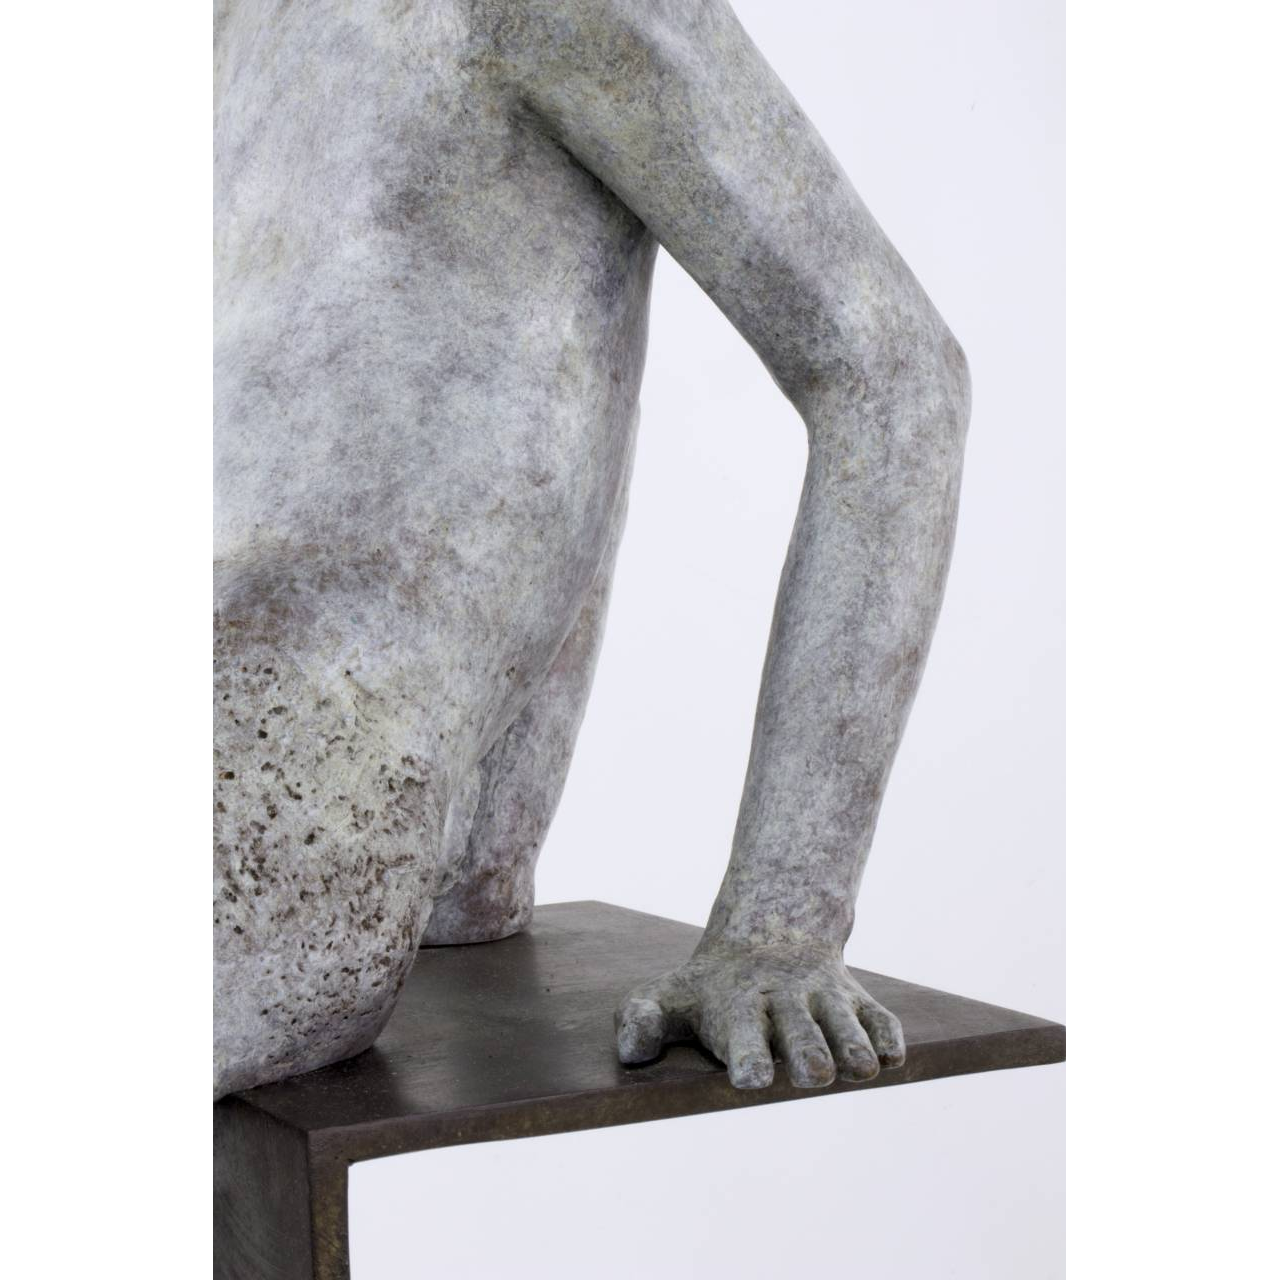 Claude JUSTAMON, L’ appel, bronze (8+4 E.A.), 54 x 31 x 25 cm